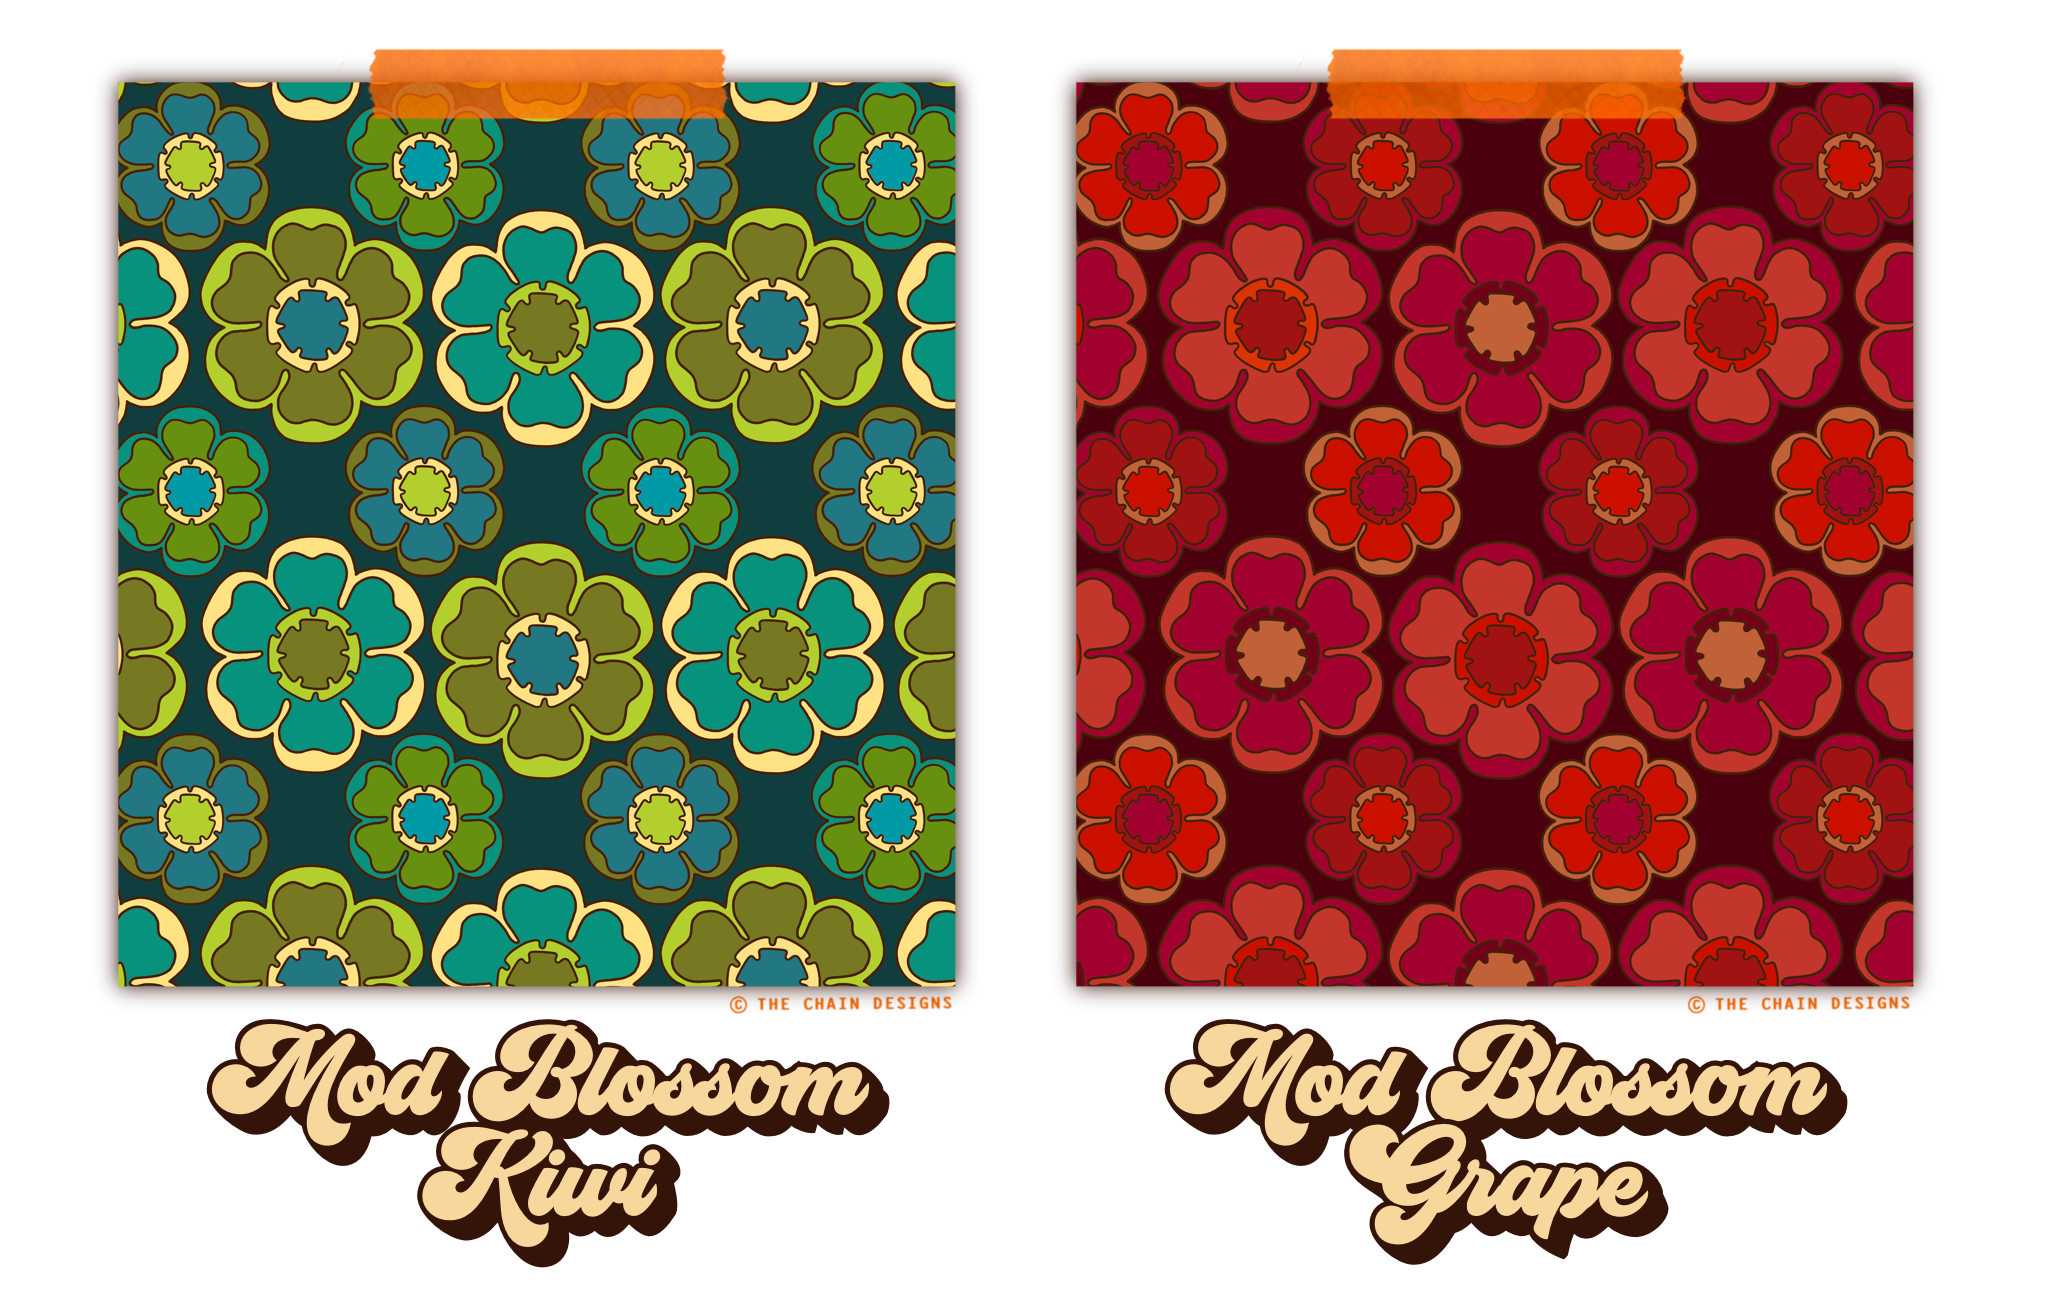 The Chain - Mod Blossom Kiwi & Grape Swatches